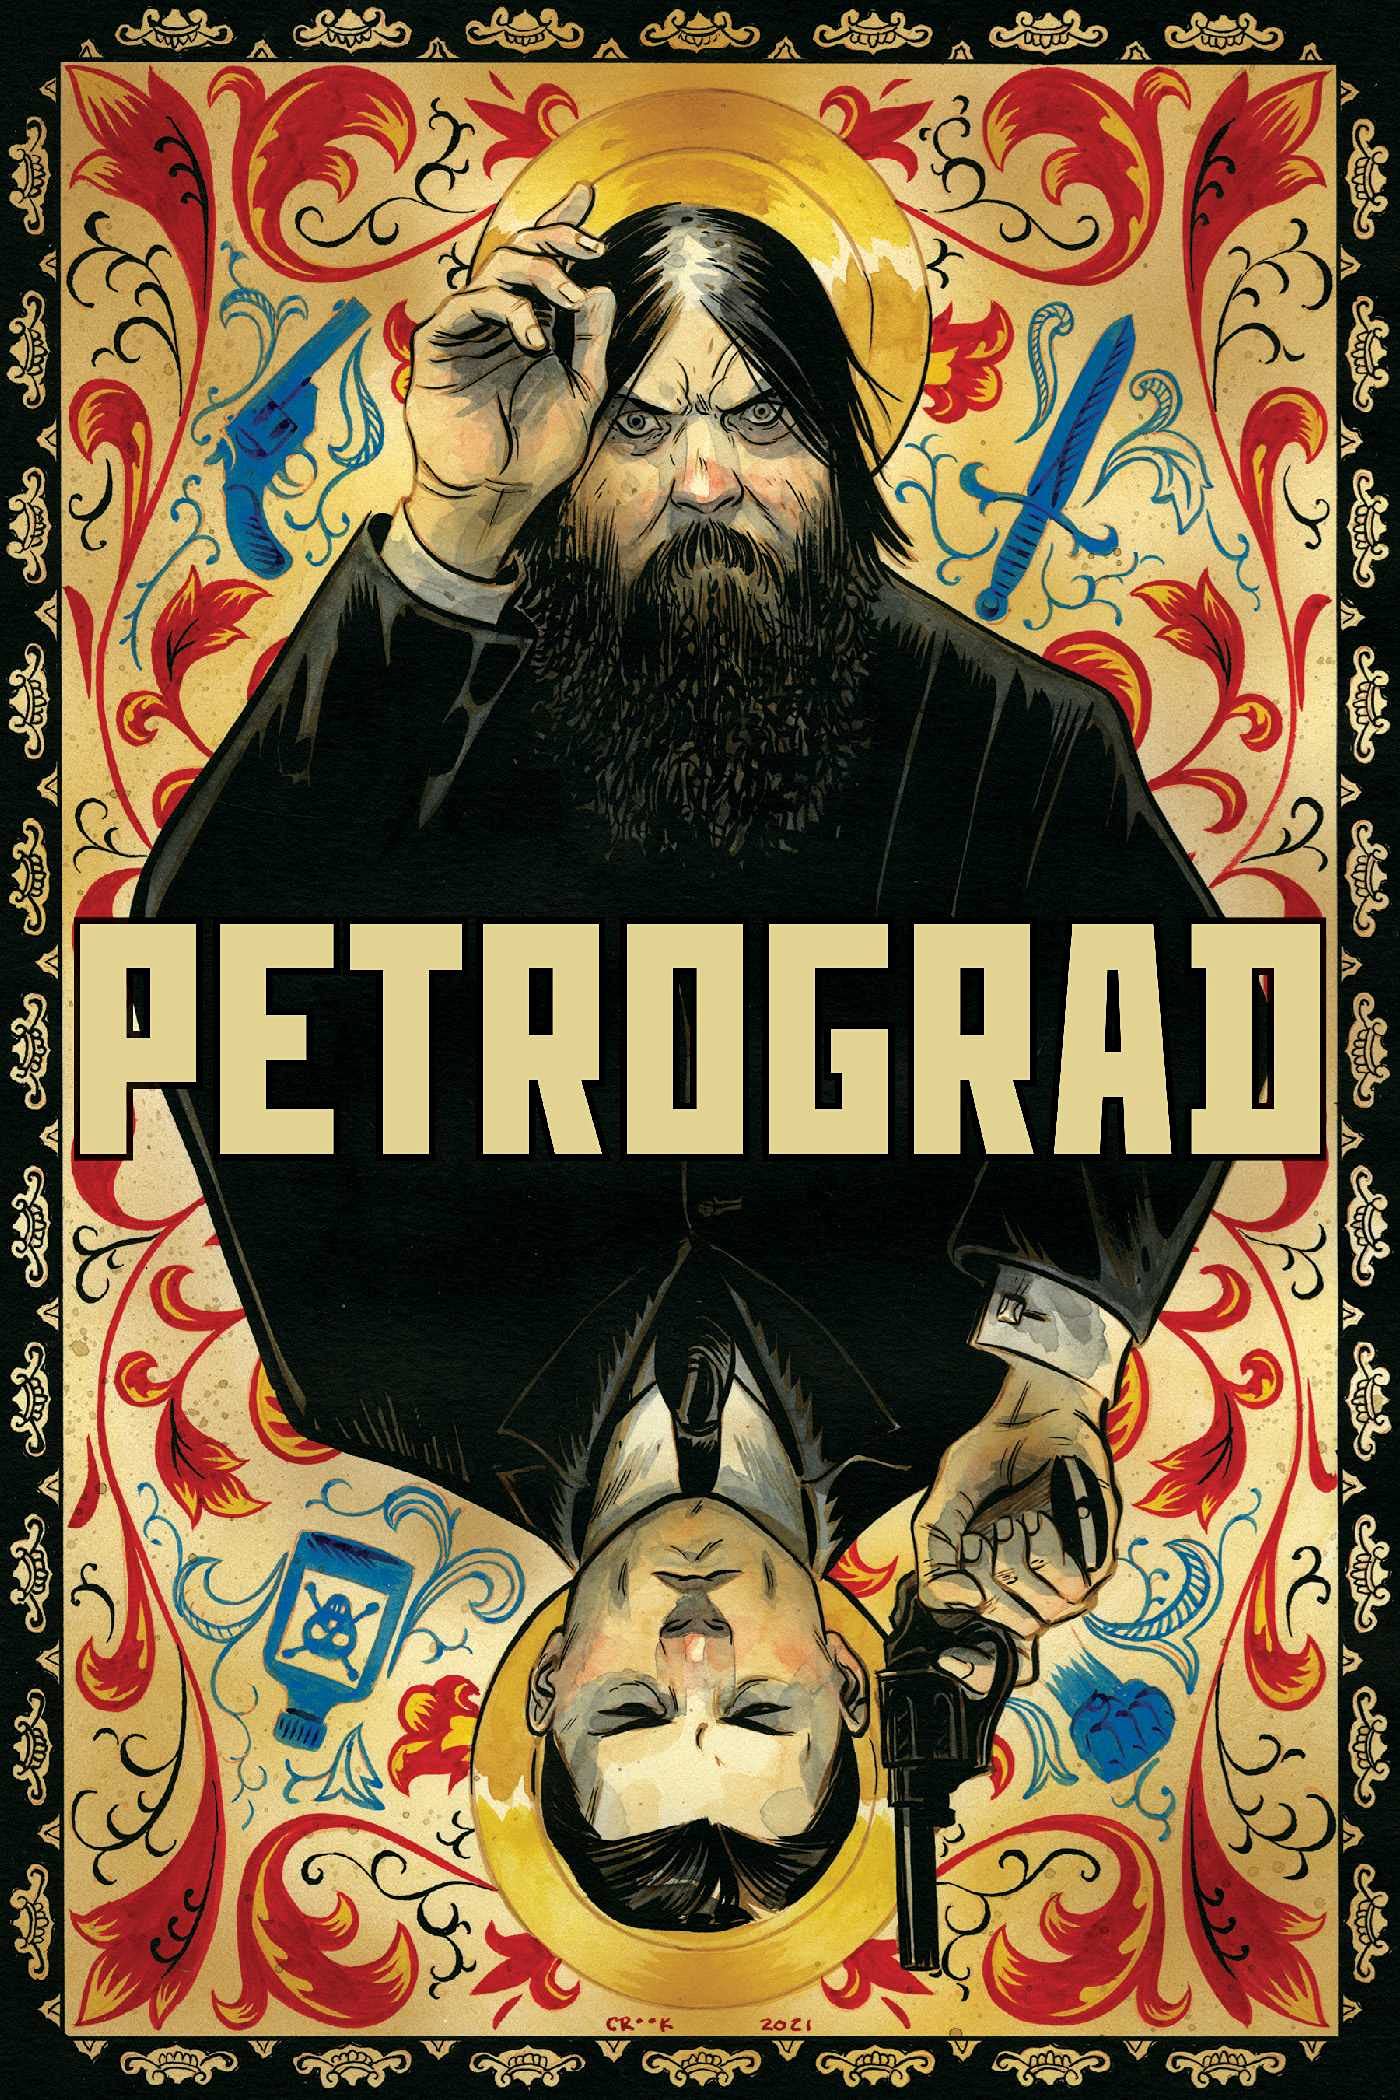 Petrograd - Third Eye